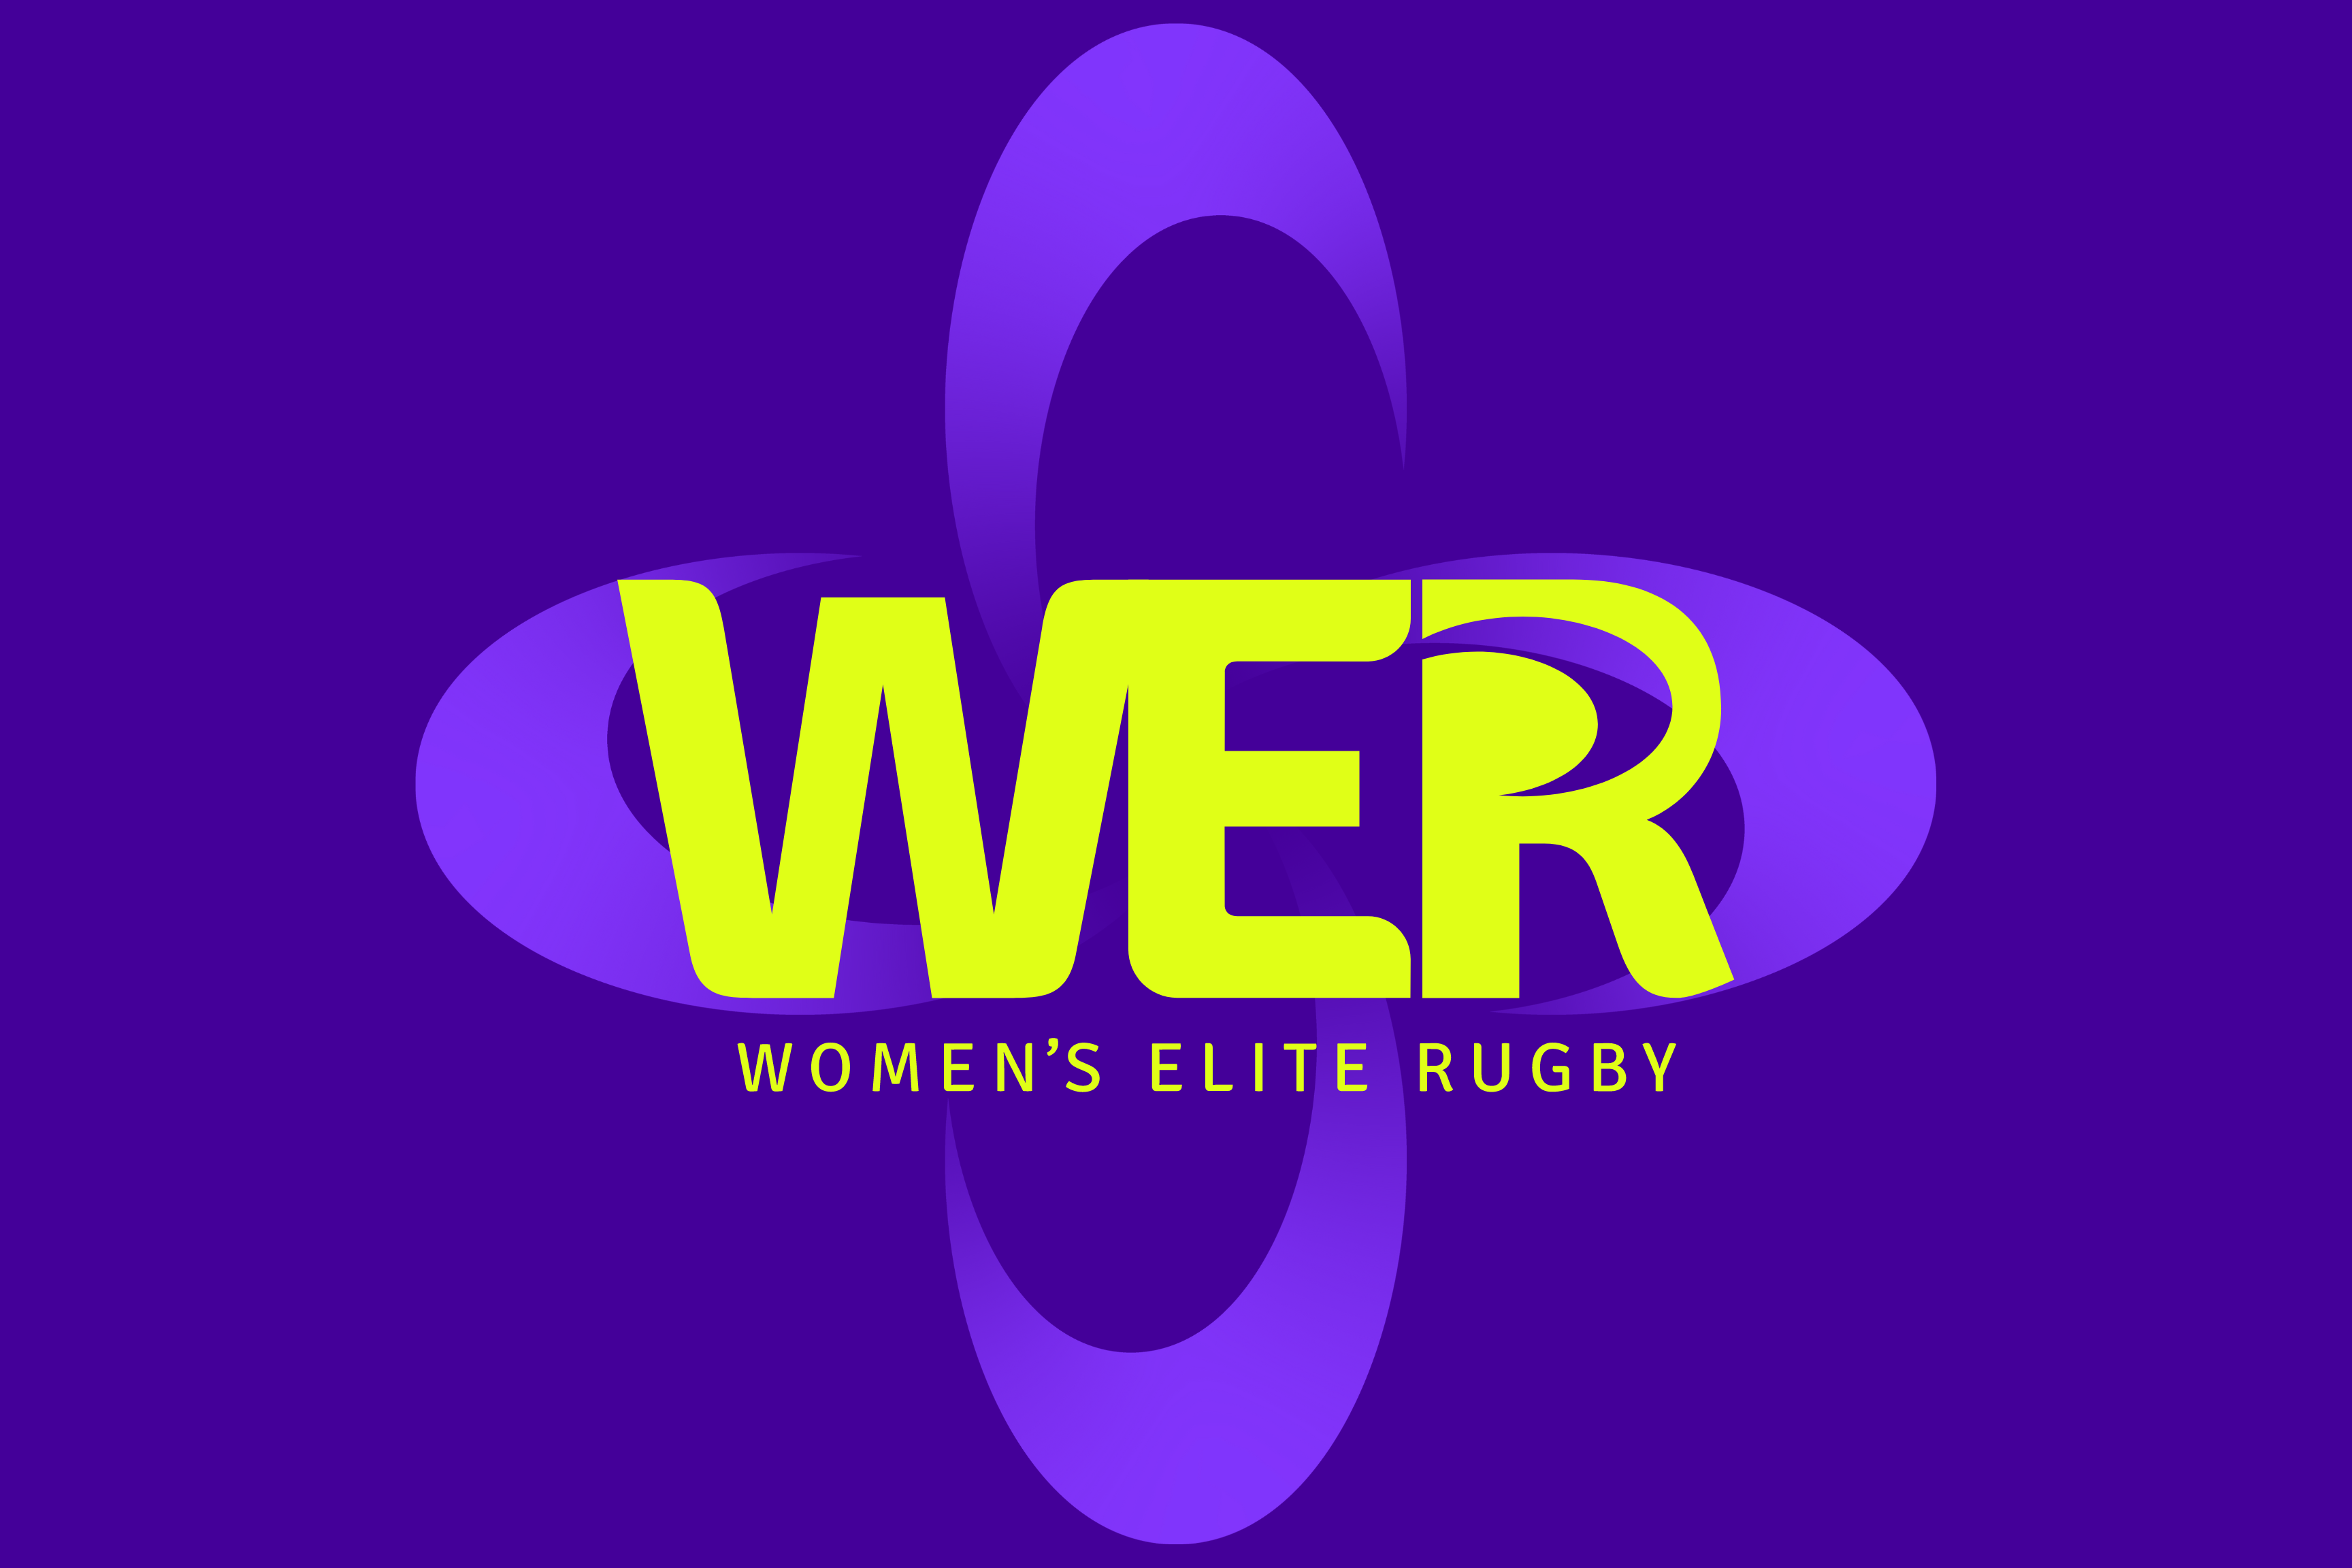 Women's Elite Rugby